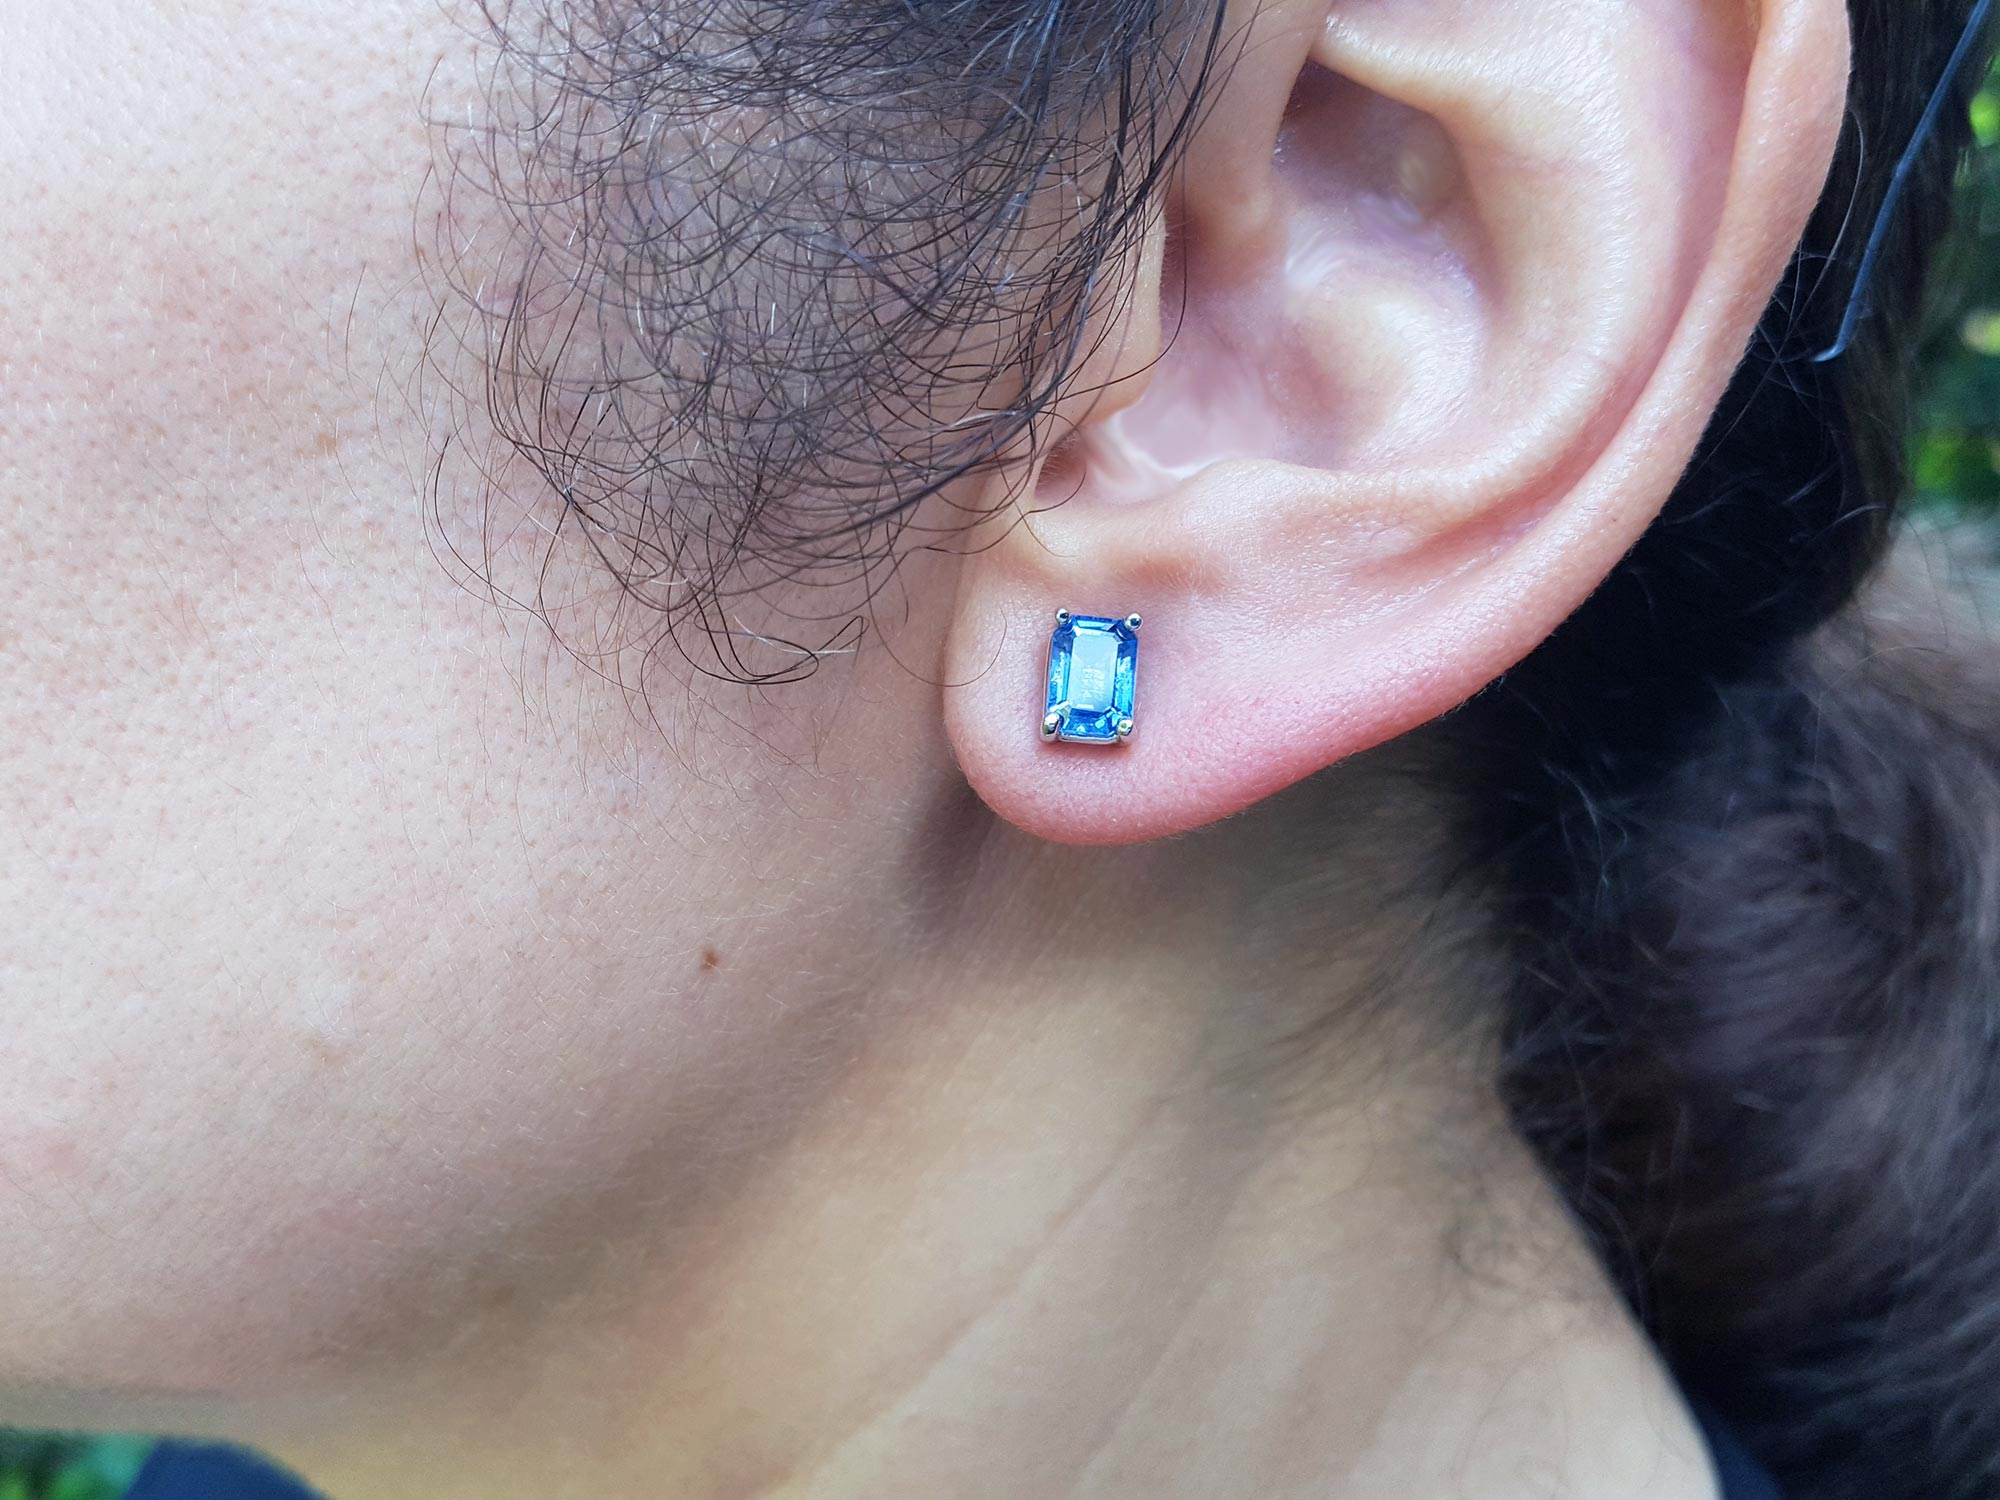 14k stud solitaire sapphire earrings